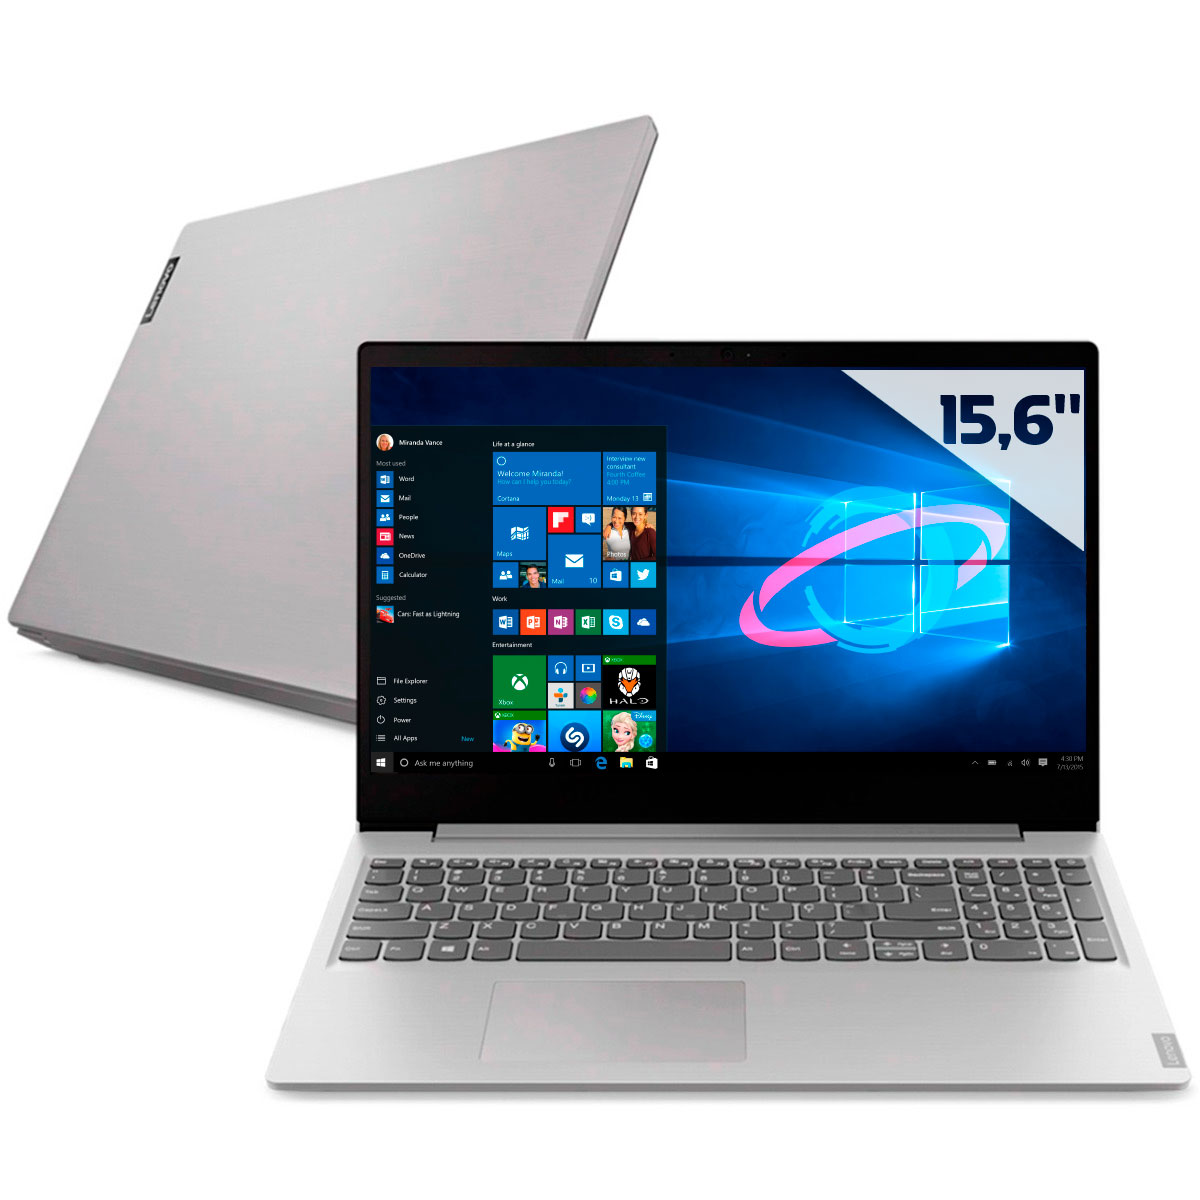 Notebook Lenovo Ideapad S145 - Intel i7 1065G7, 8GB, SSD 256GB, Tela 15.6